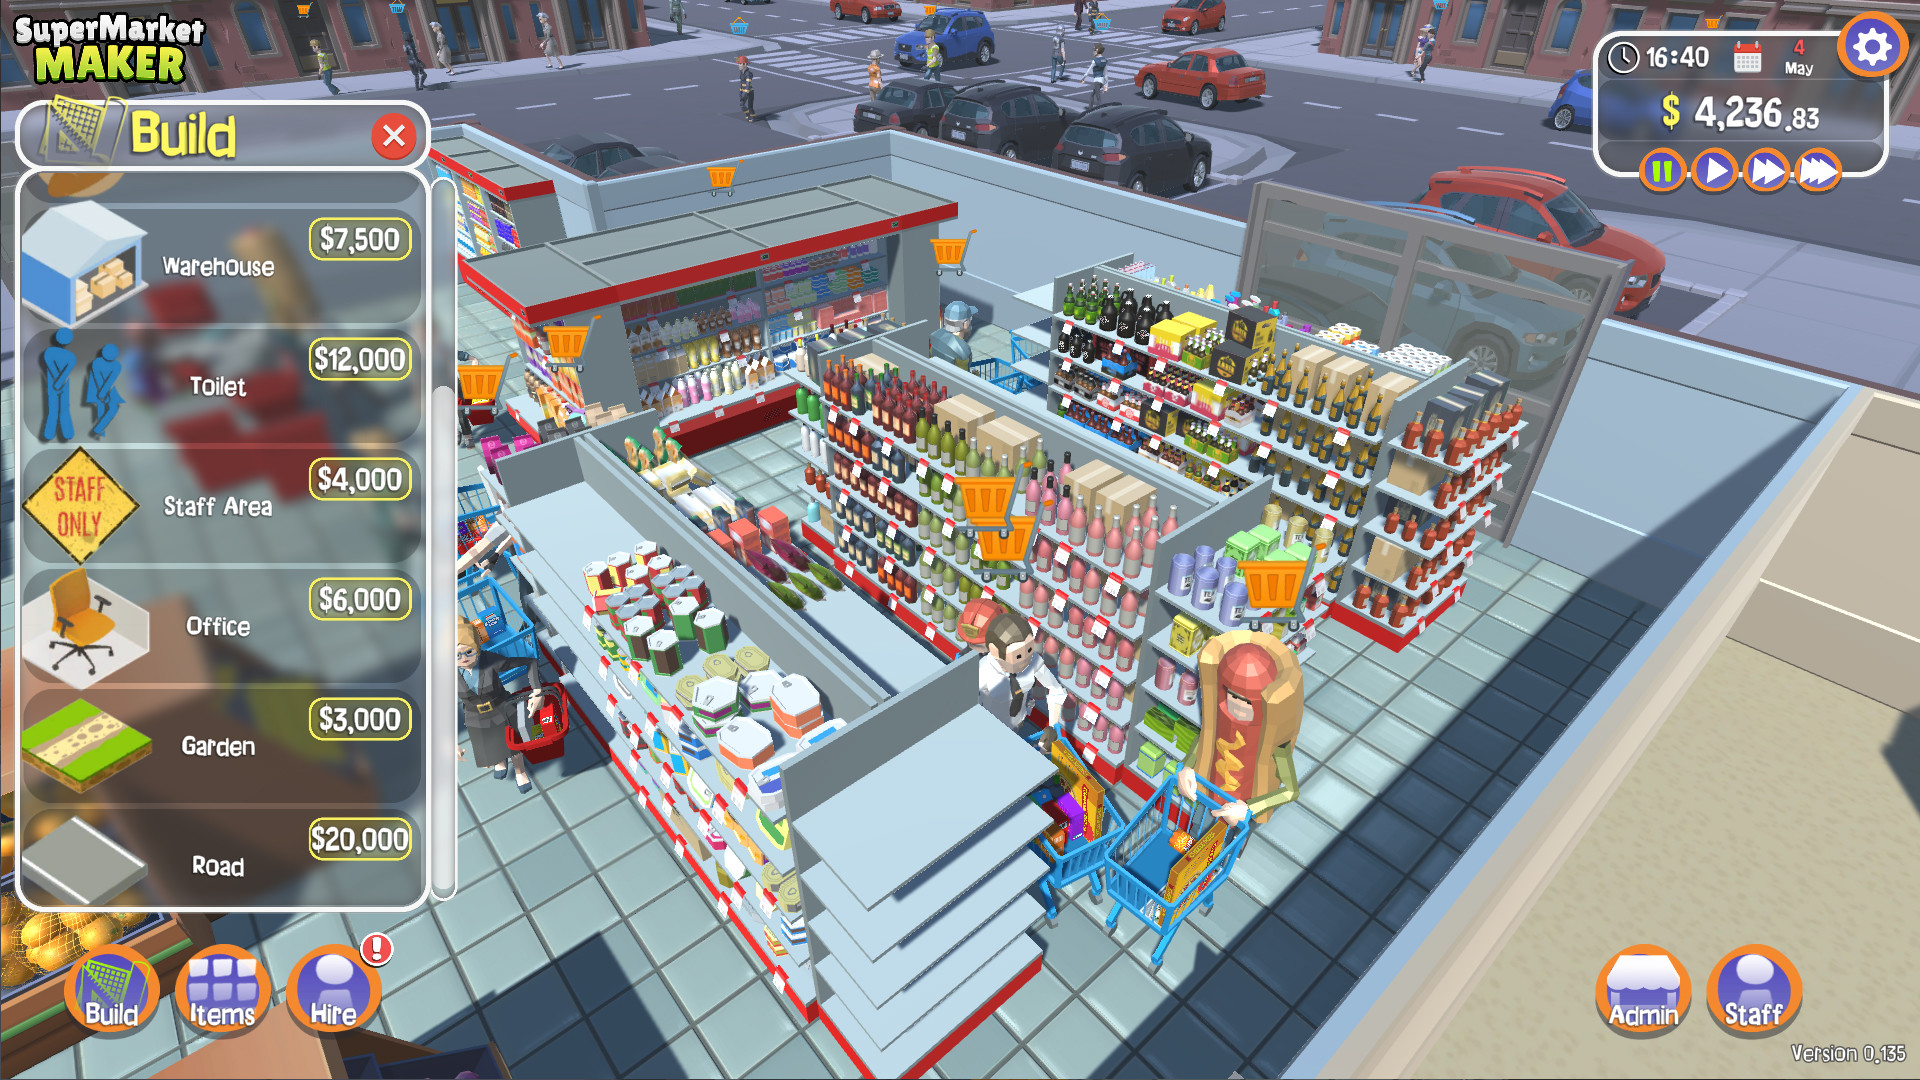 Supermarket simulator 0.1 2.3. Supermarket игра. Cegthvfhrtncbvekznjh. Игра супермаркет на ПК. Симулятор продуктового магазина.